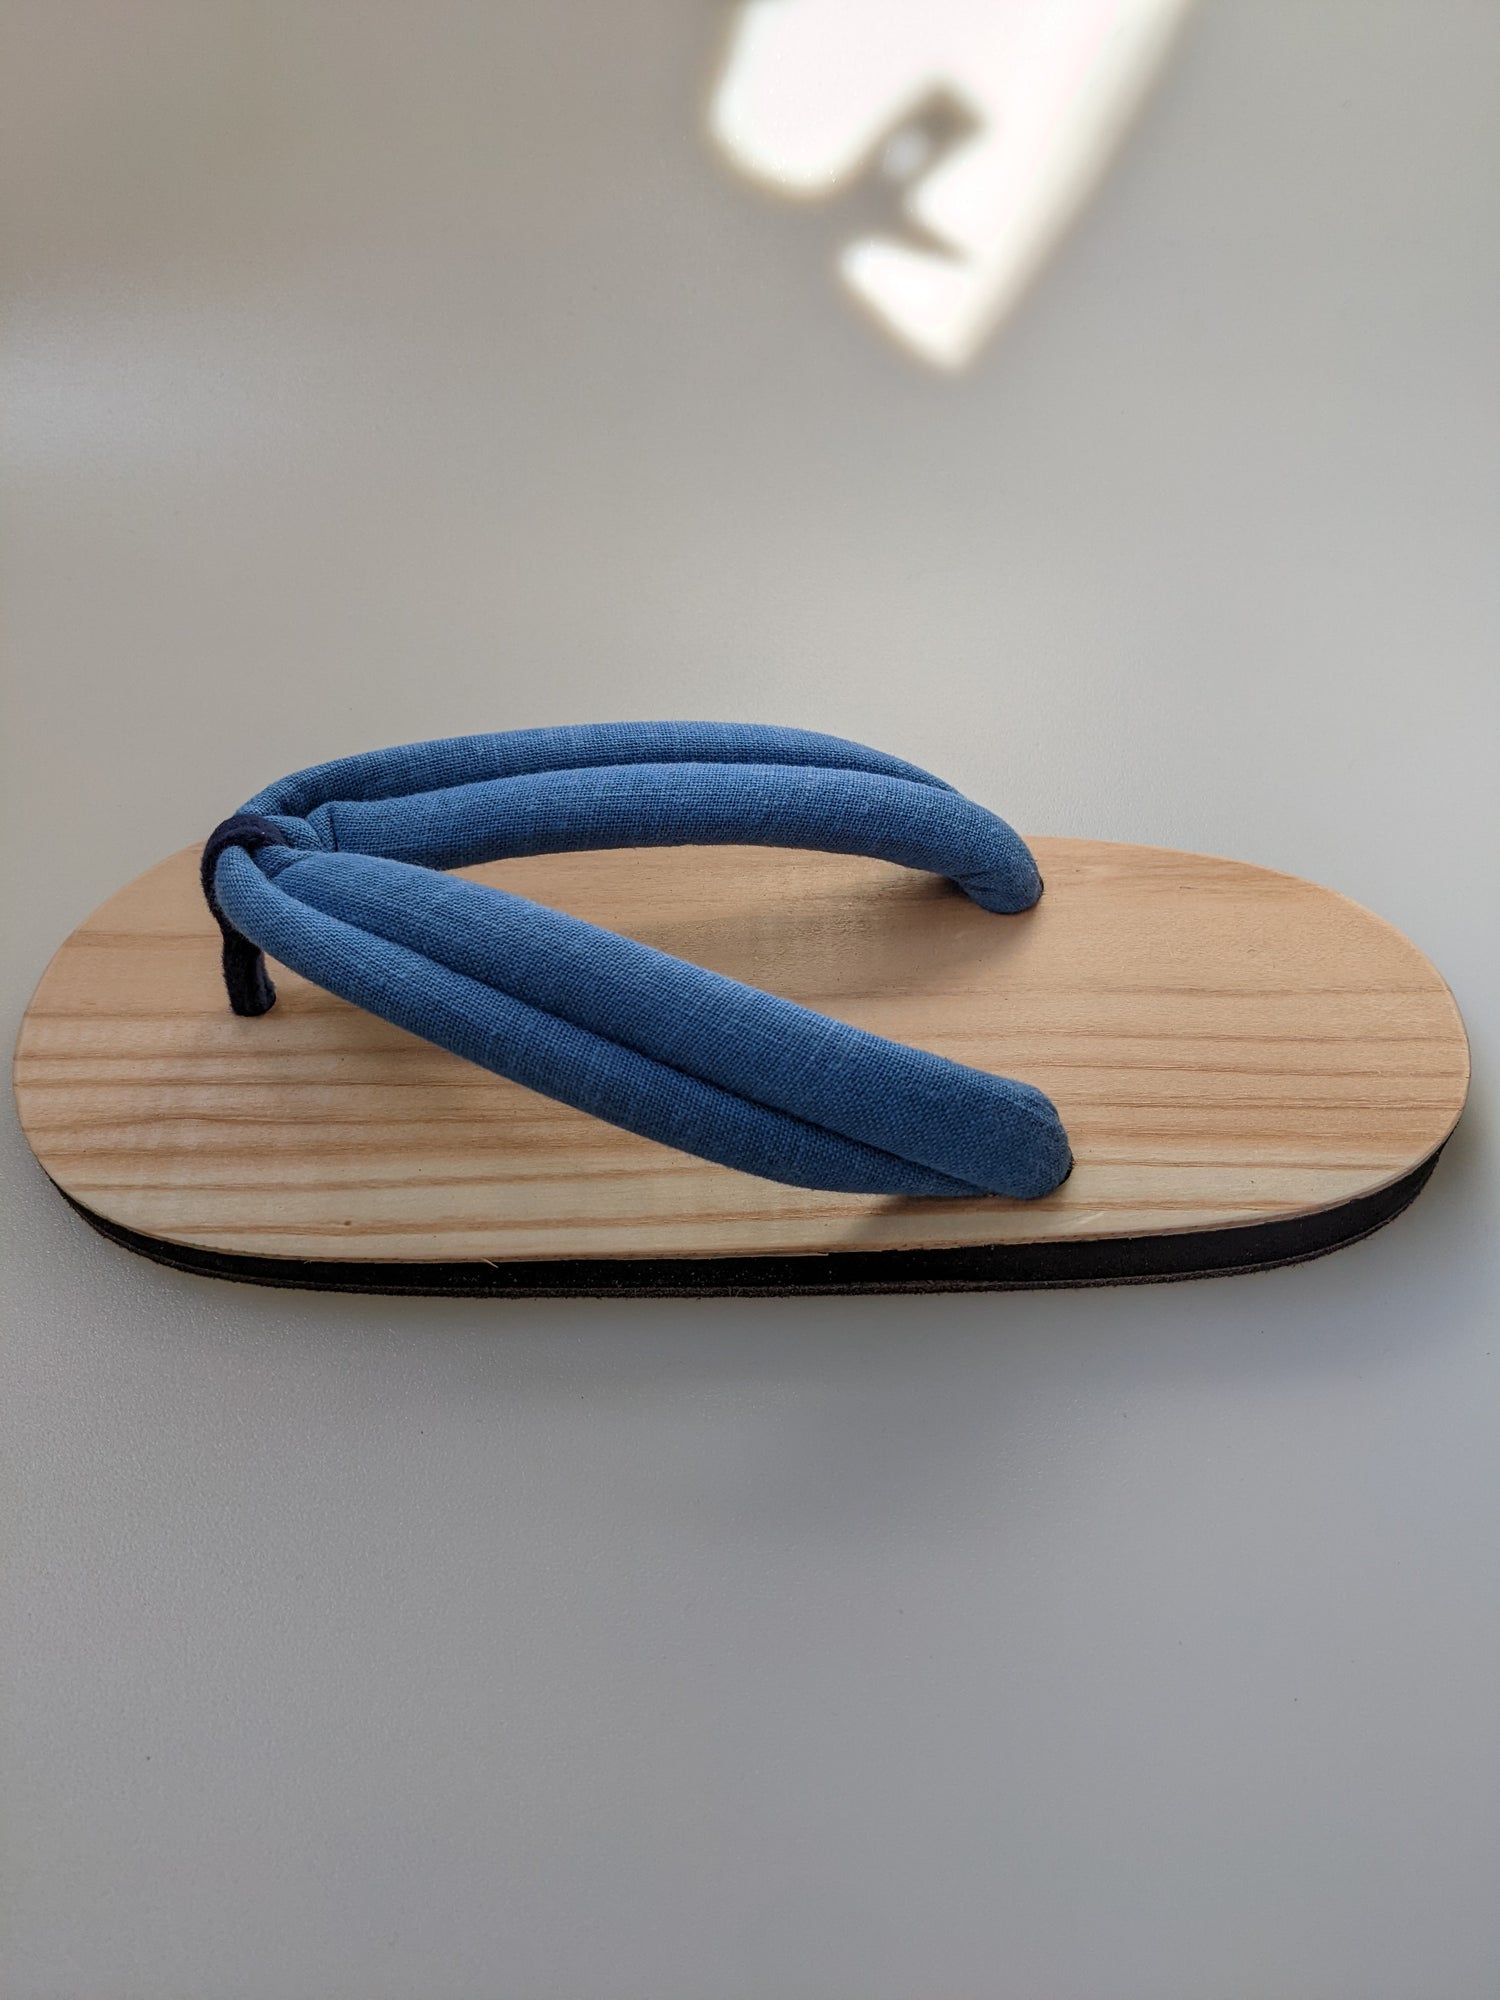 Japanese Slippers | Wood Indoor slippers | Heiwa Slipper